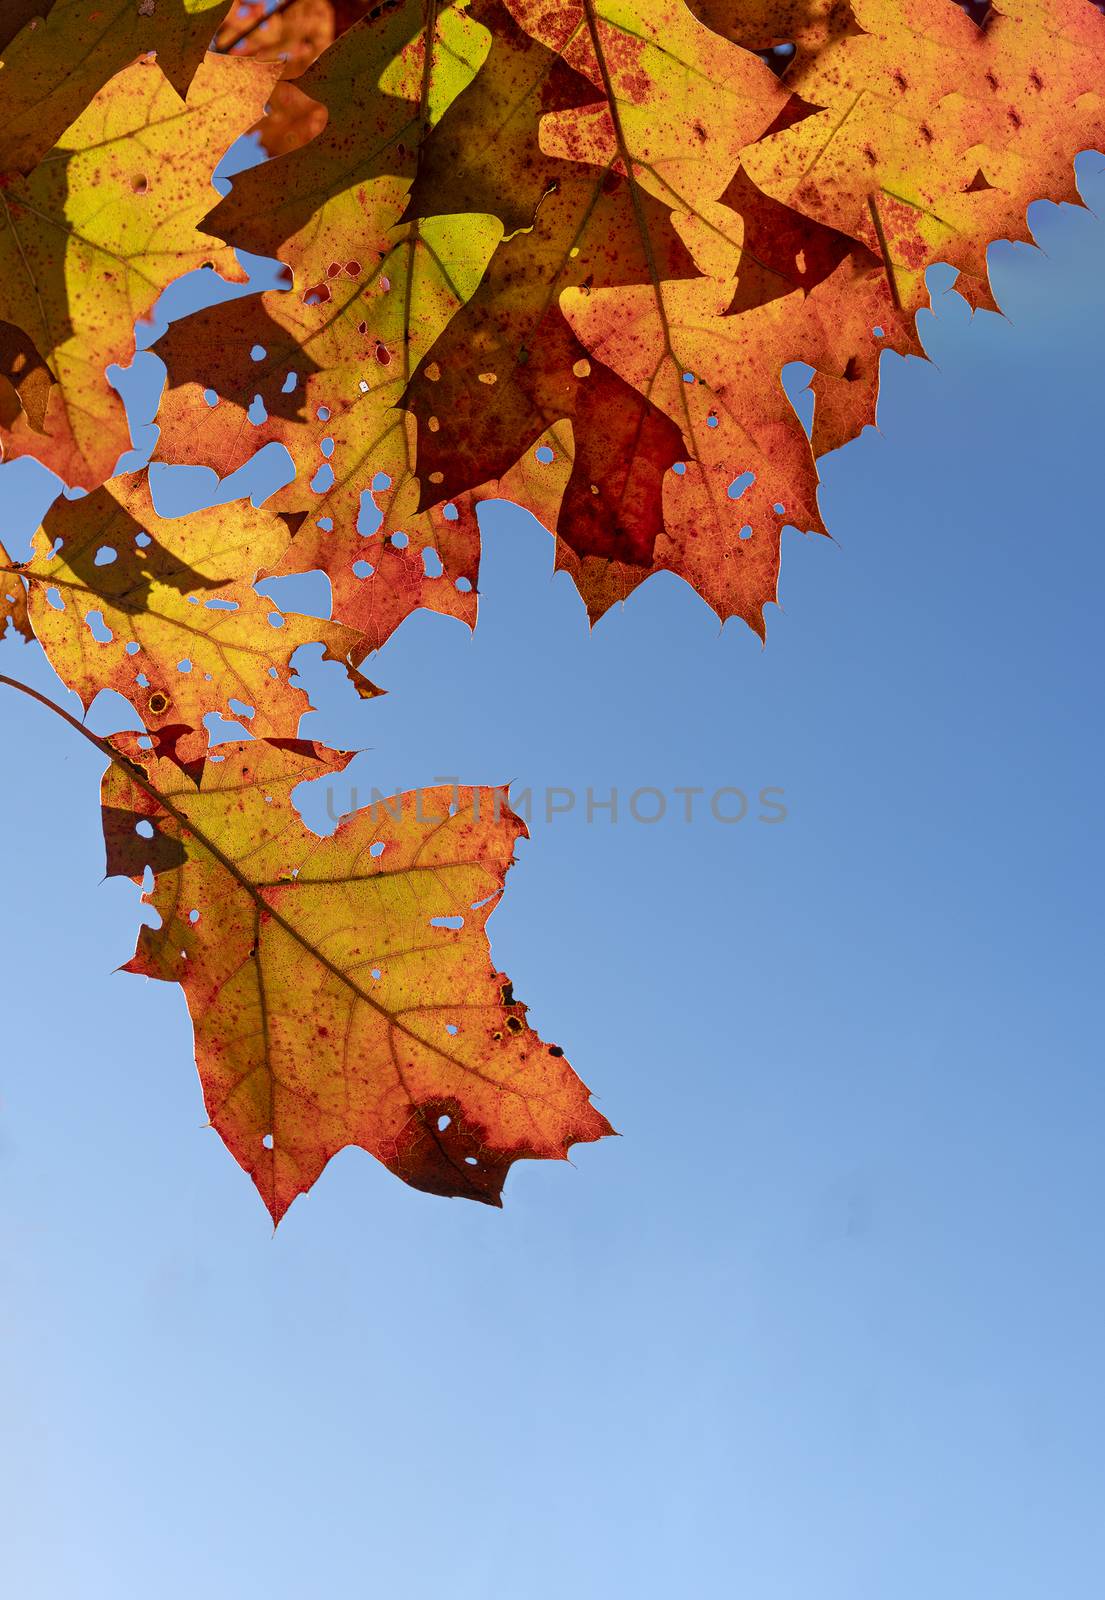 Autumn oak leaves on blue sky background by ben44